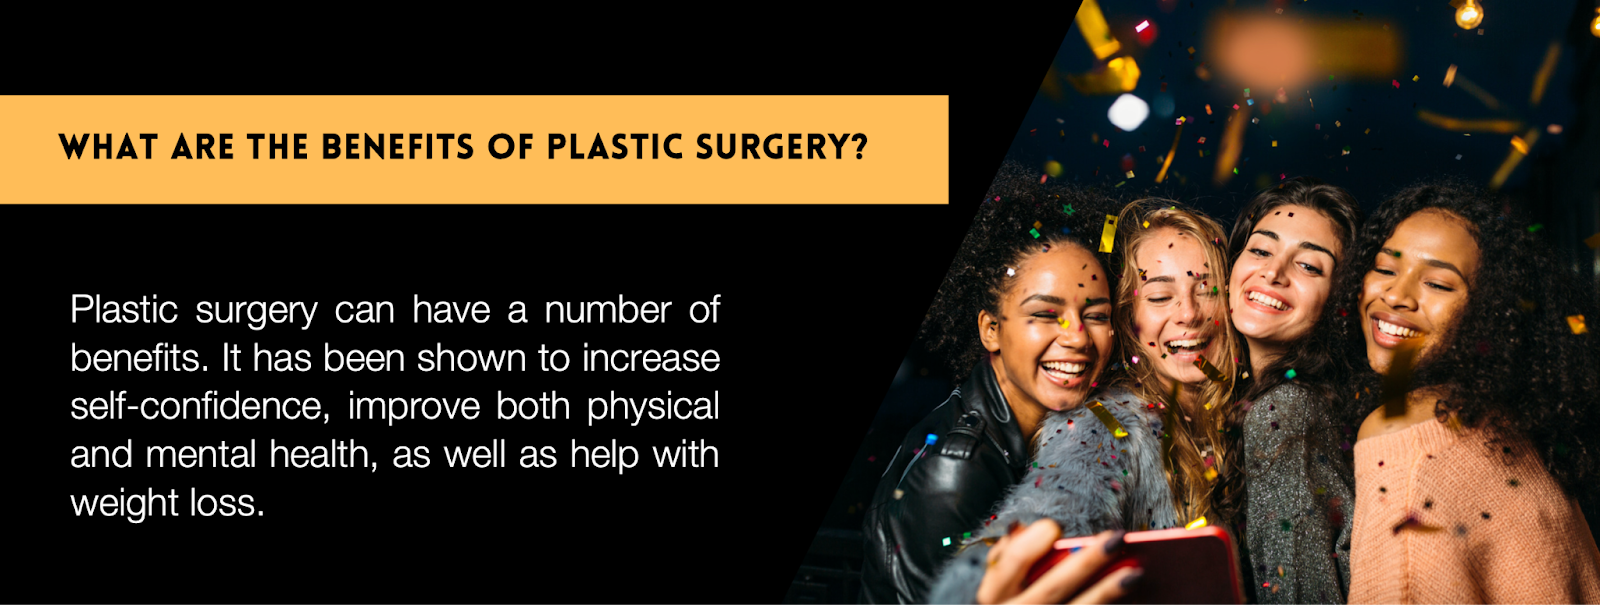 benefits of plastic surgery